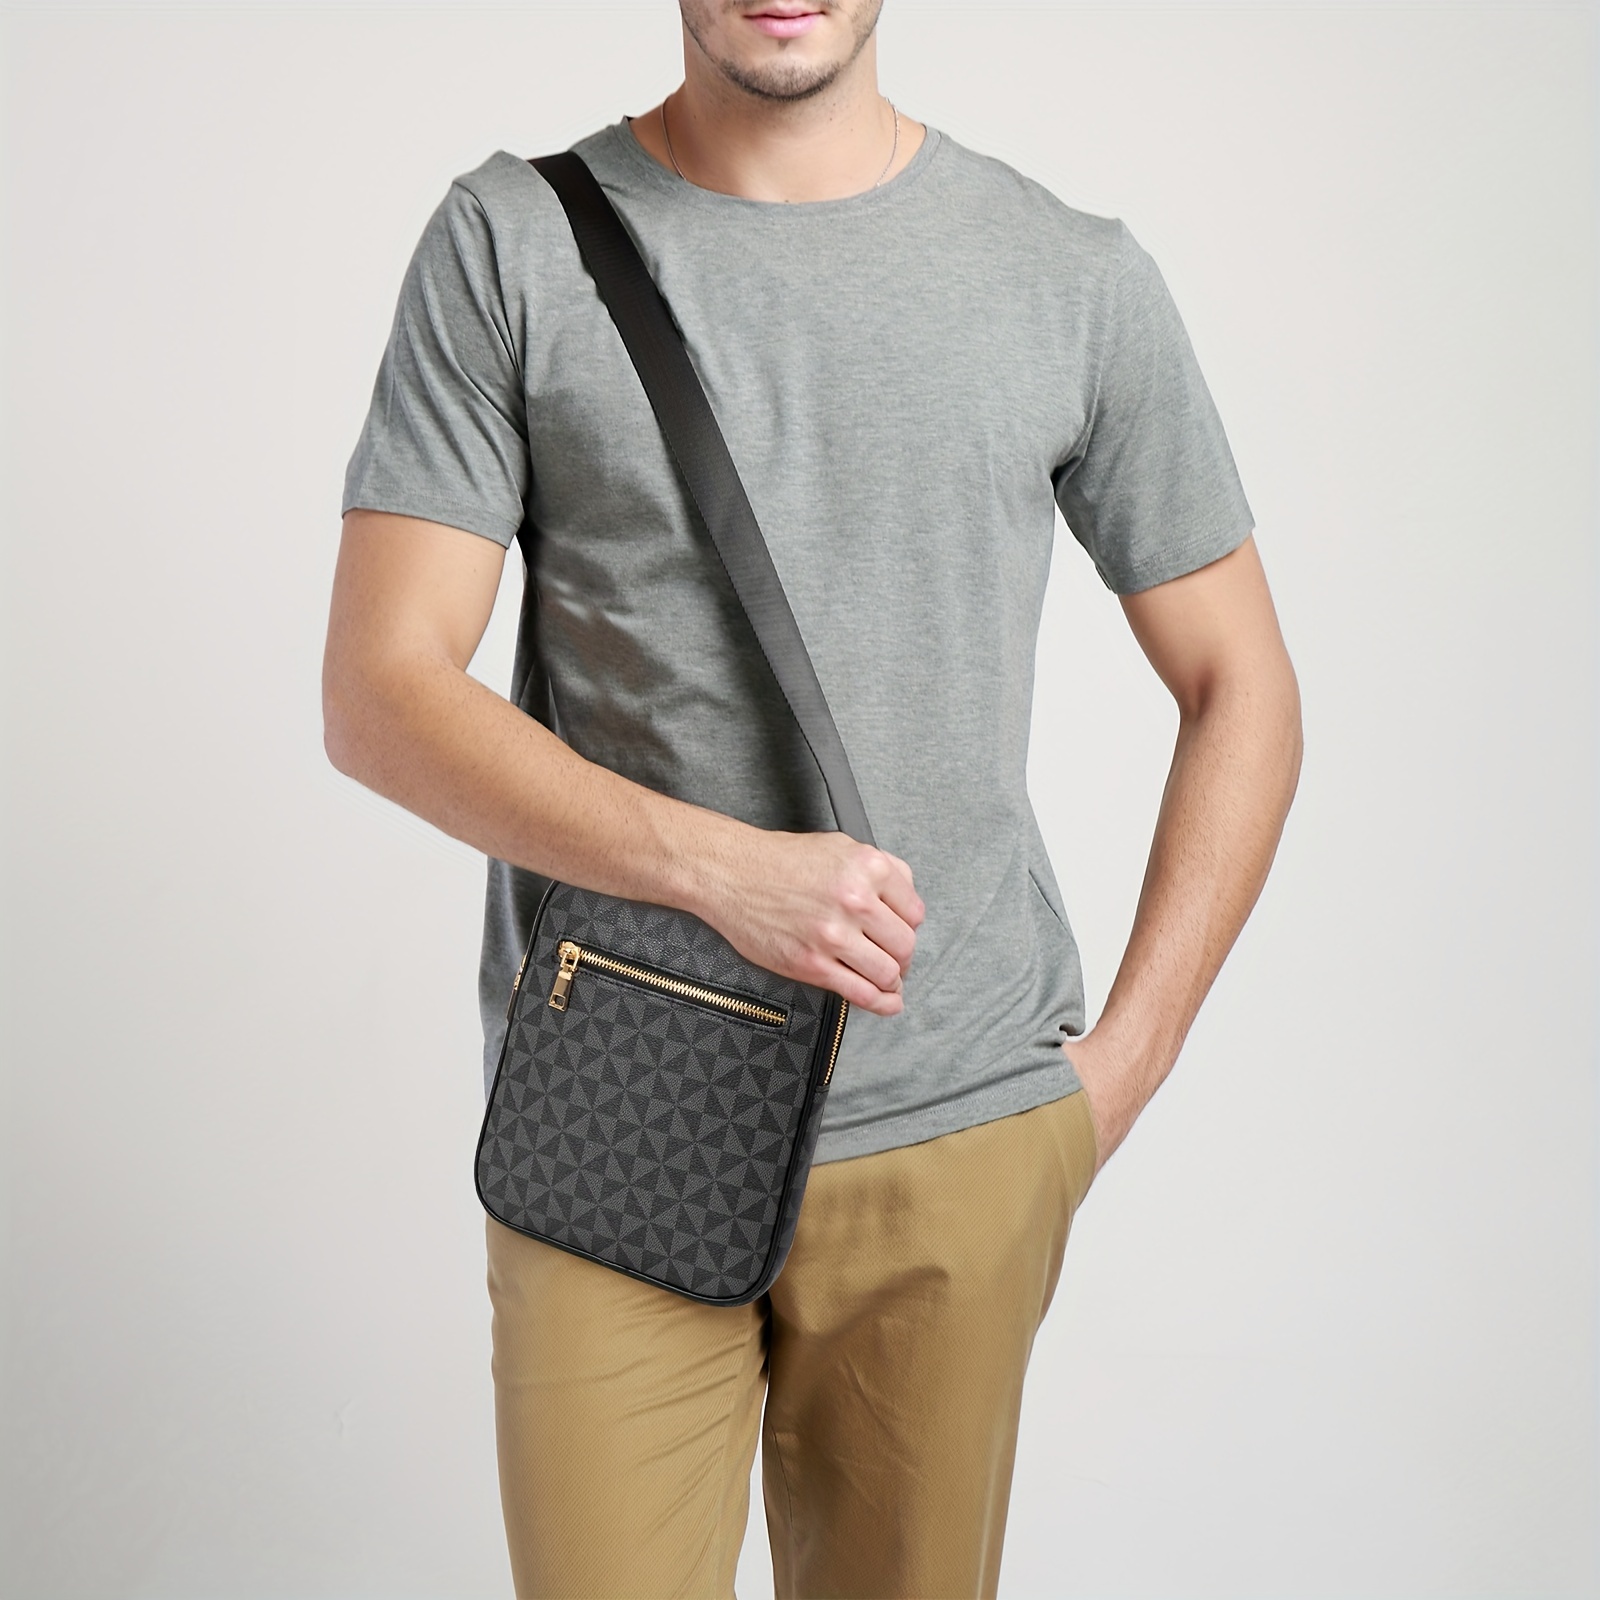 Men's Crossbody Bag, New Fashion Simple Small Shoulder Bag, Can